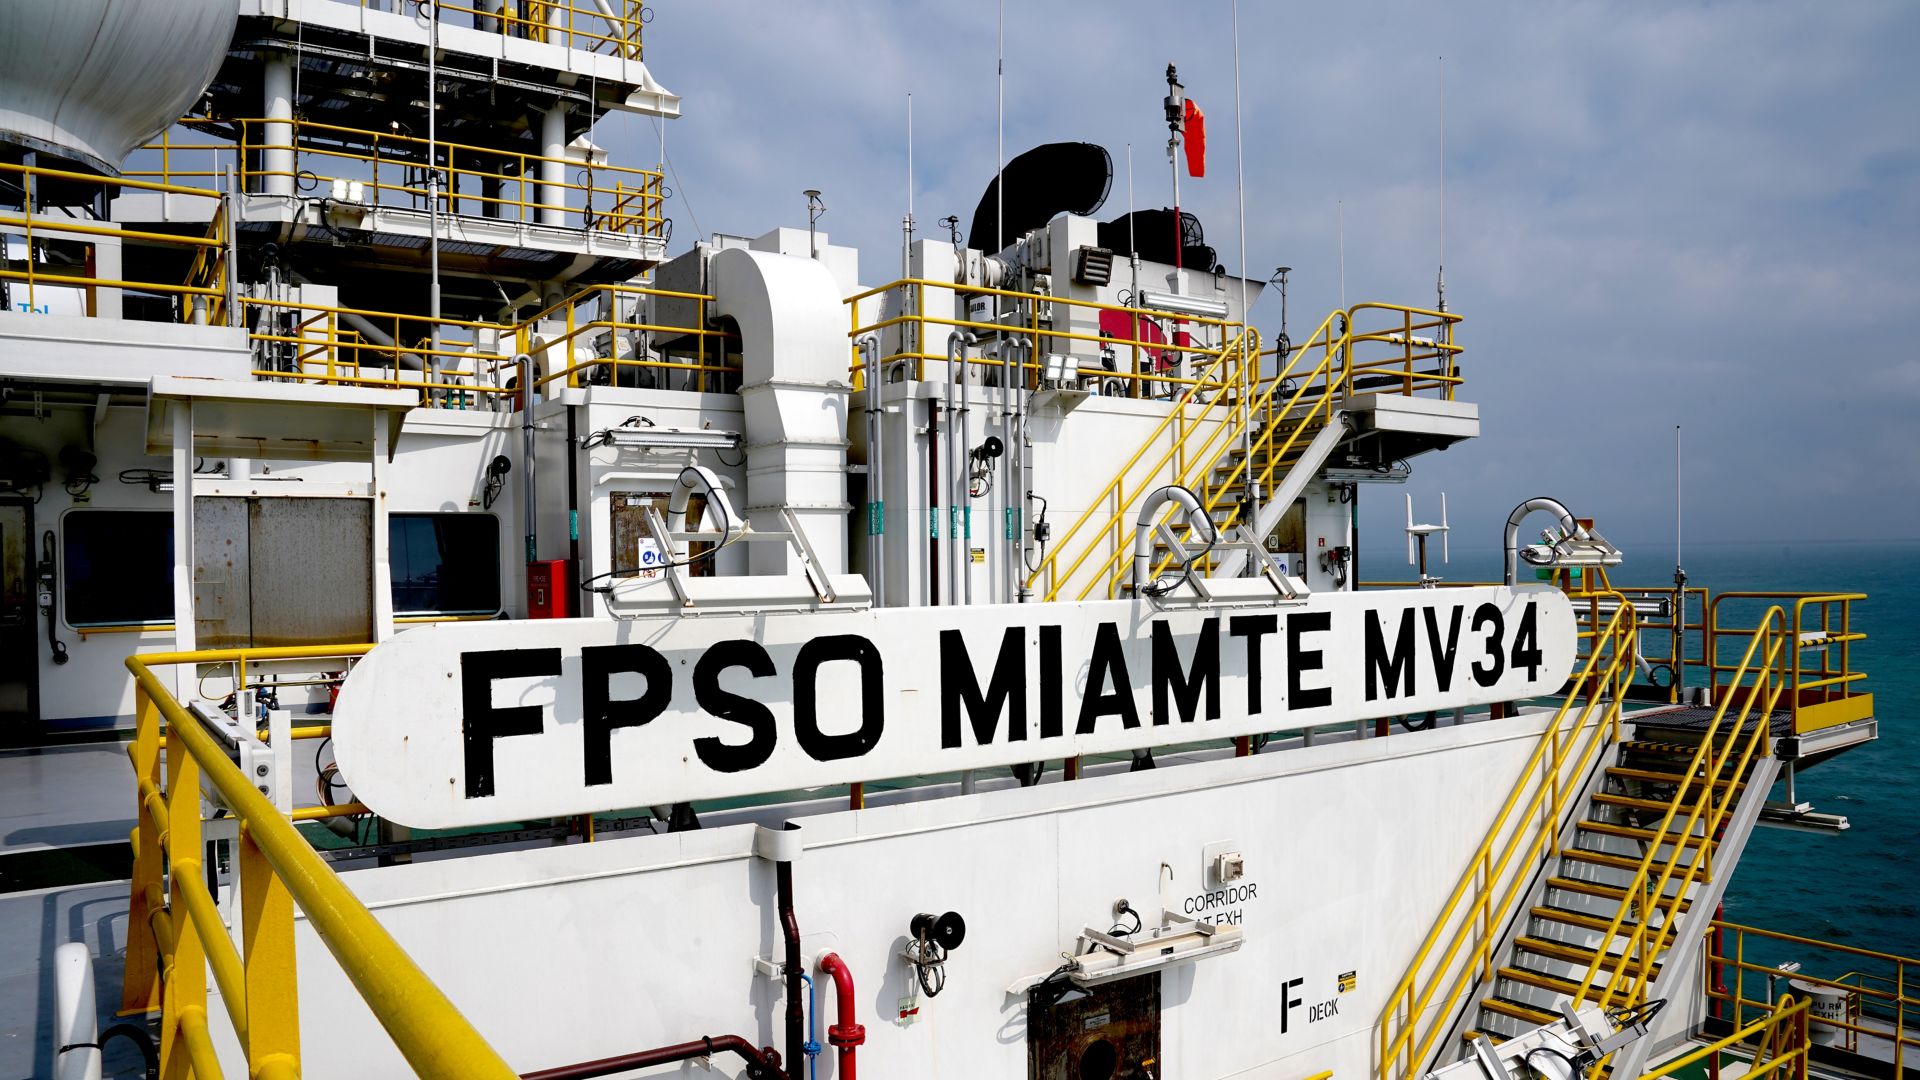 Detail of the Fspo Miante ship